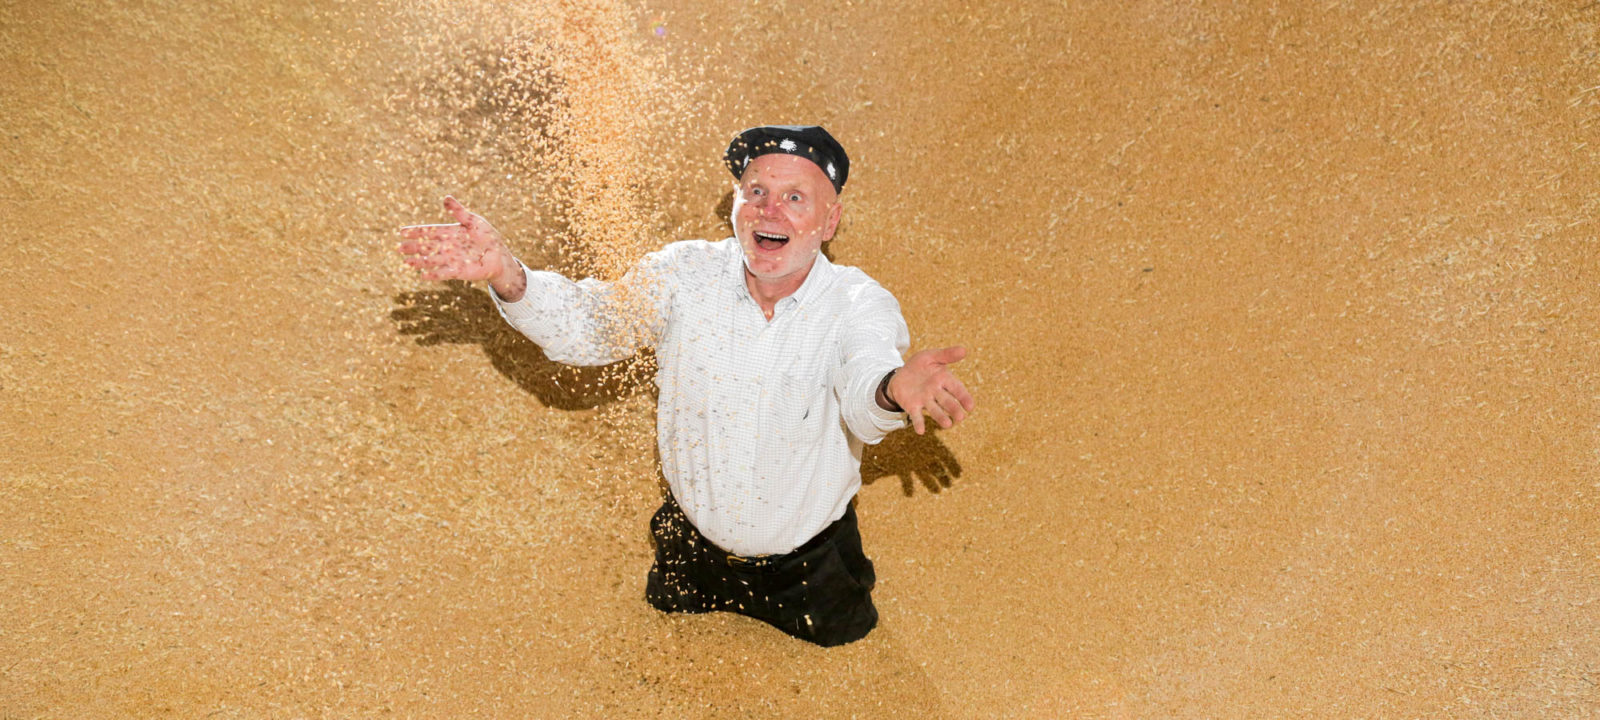 Laucke Flour Mills elevate the humble grain